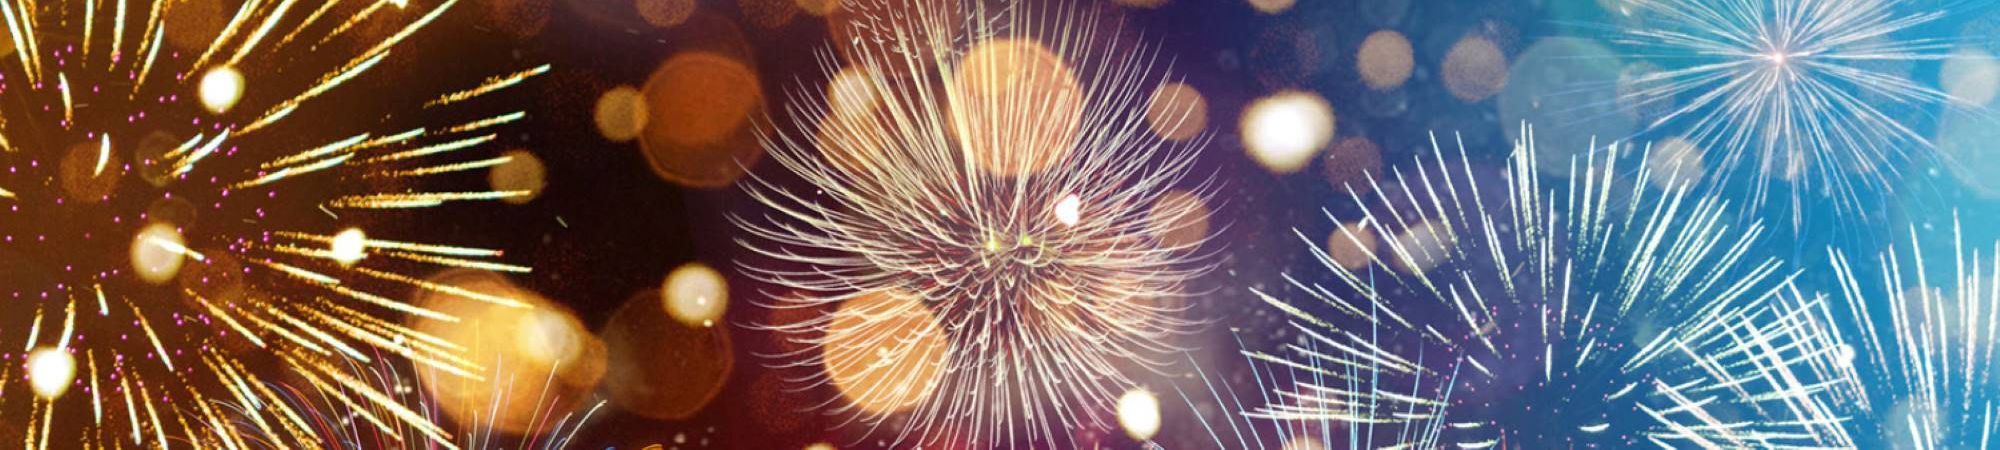 fireworks & freedom fest 